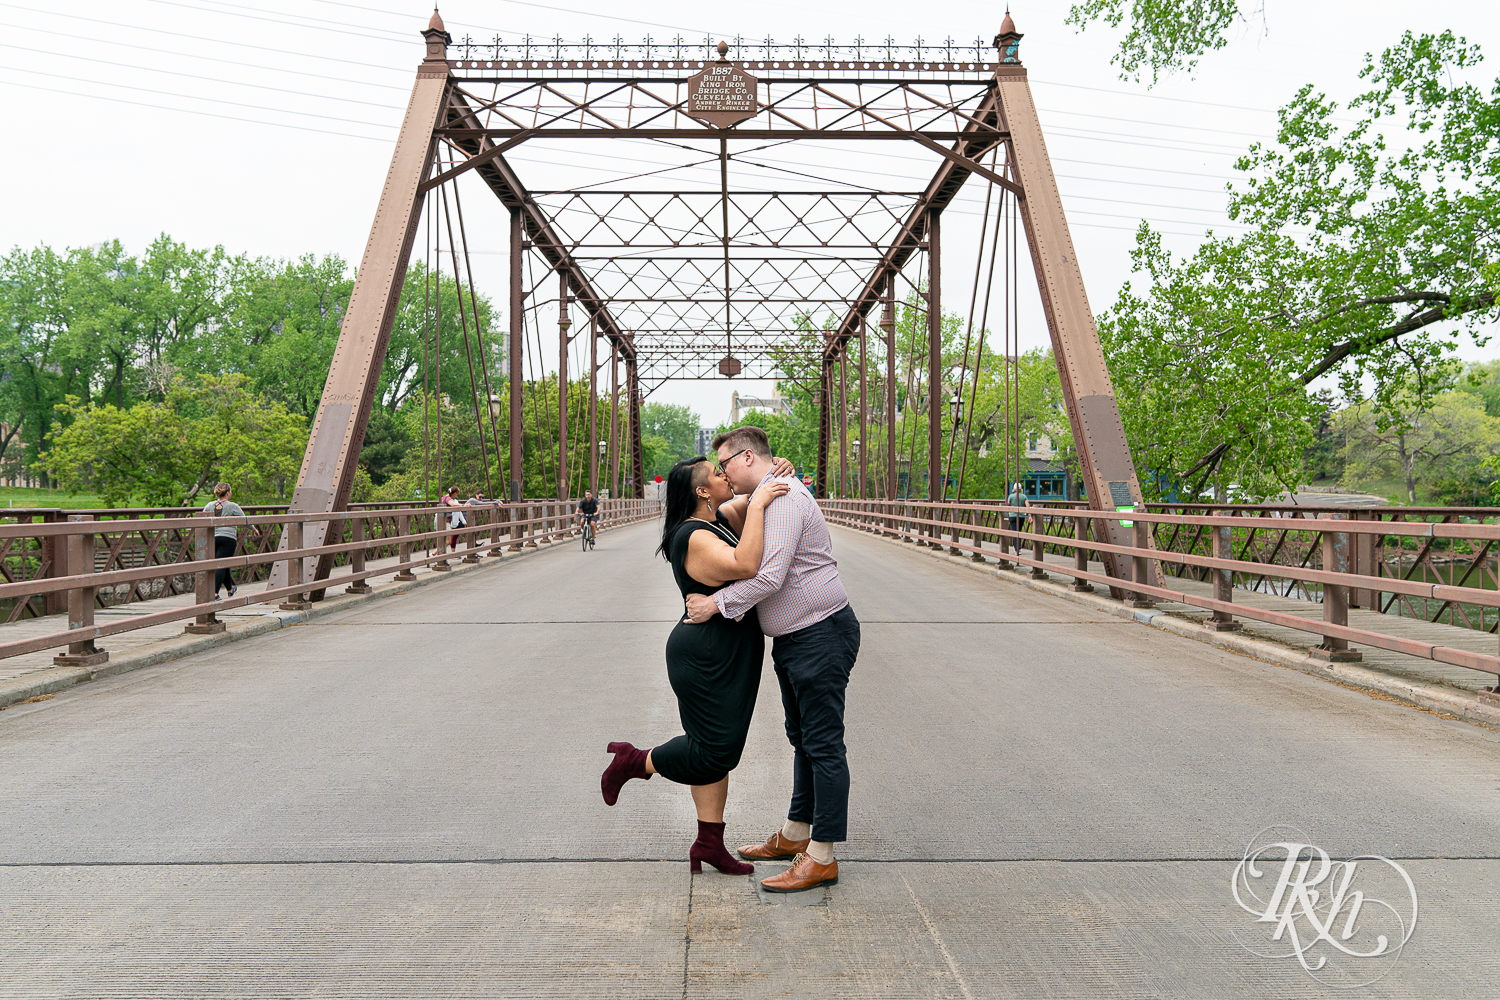 Man and Filipino woman kiss on bridge on Nicollet Island in Minneapolis, Minnesota.